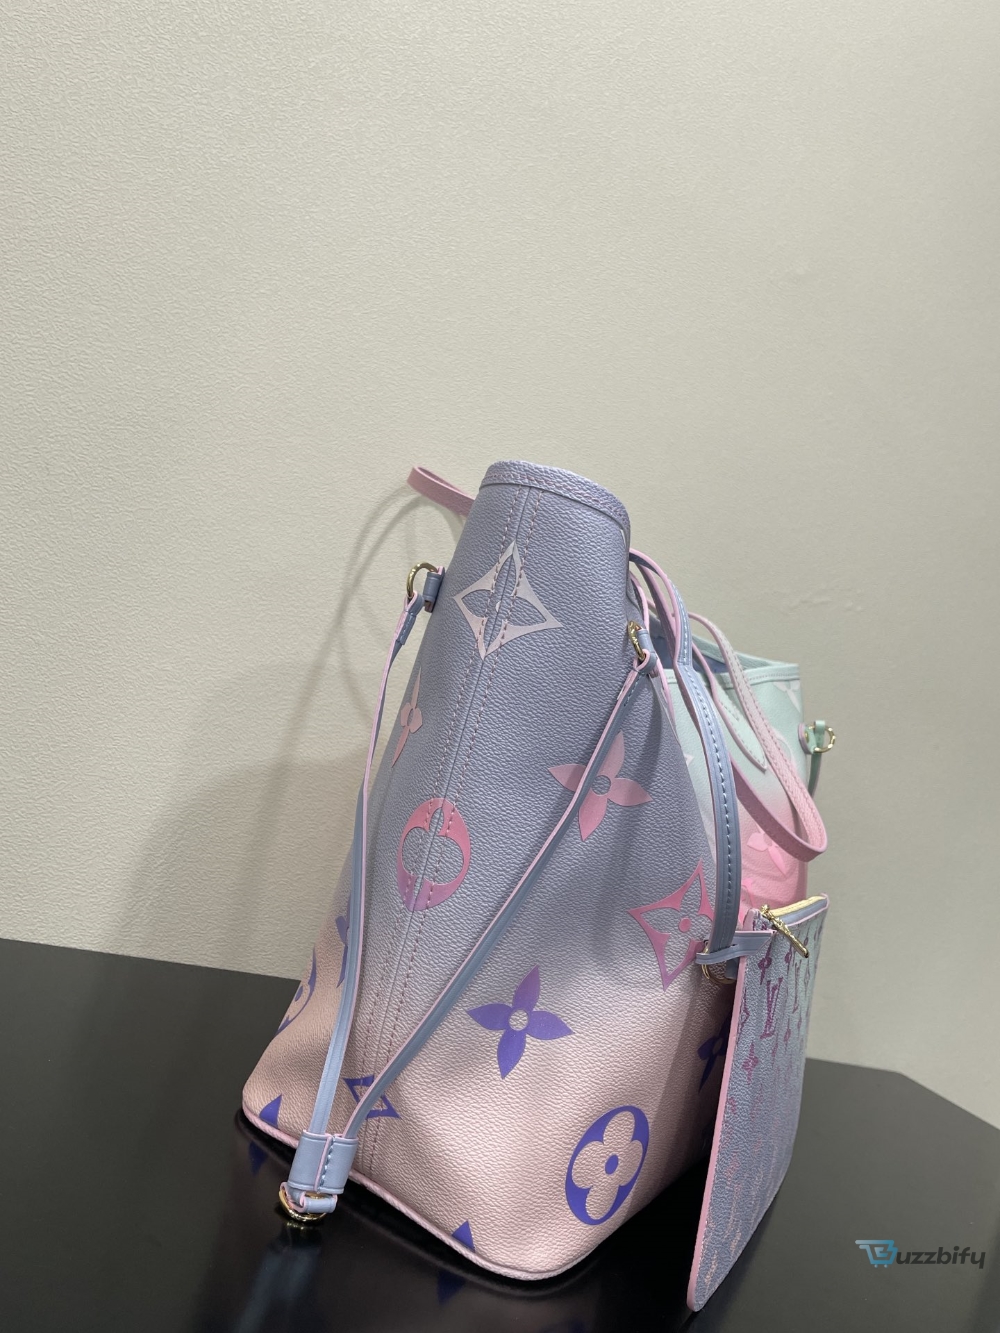 louis vuitton neverfull mm tote bag monogram canvas sunrise pastel for women womens handbags shoulder bags 122in31cm lv m46077 2799 buzzbify 1 26